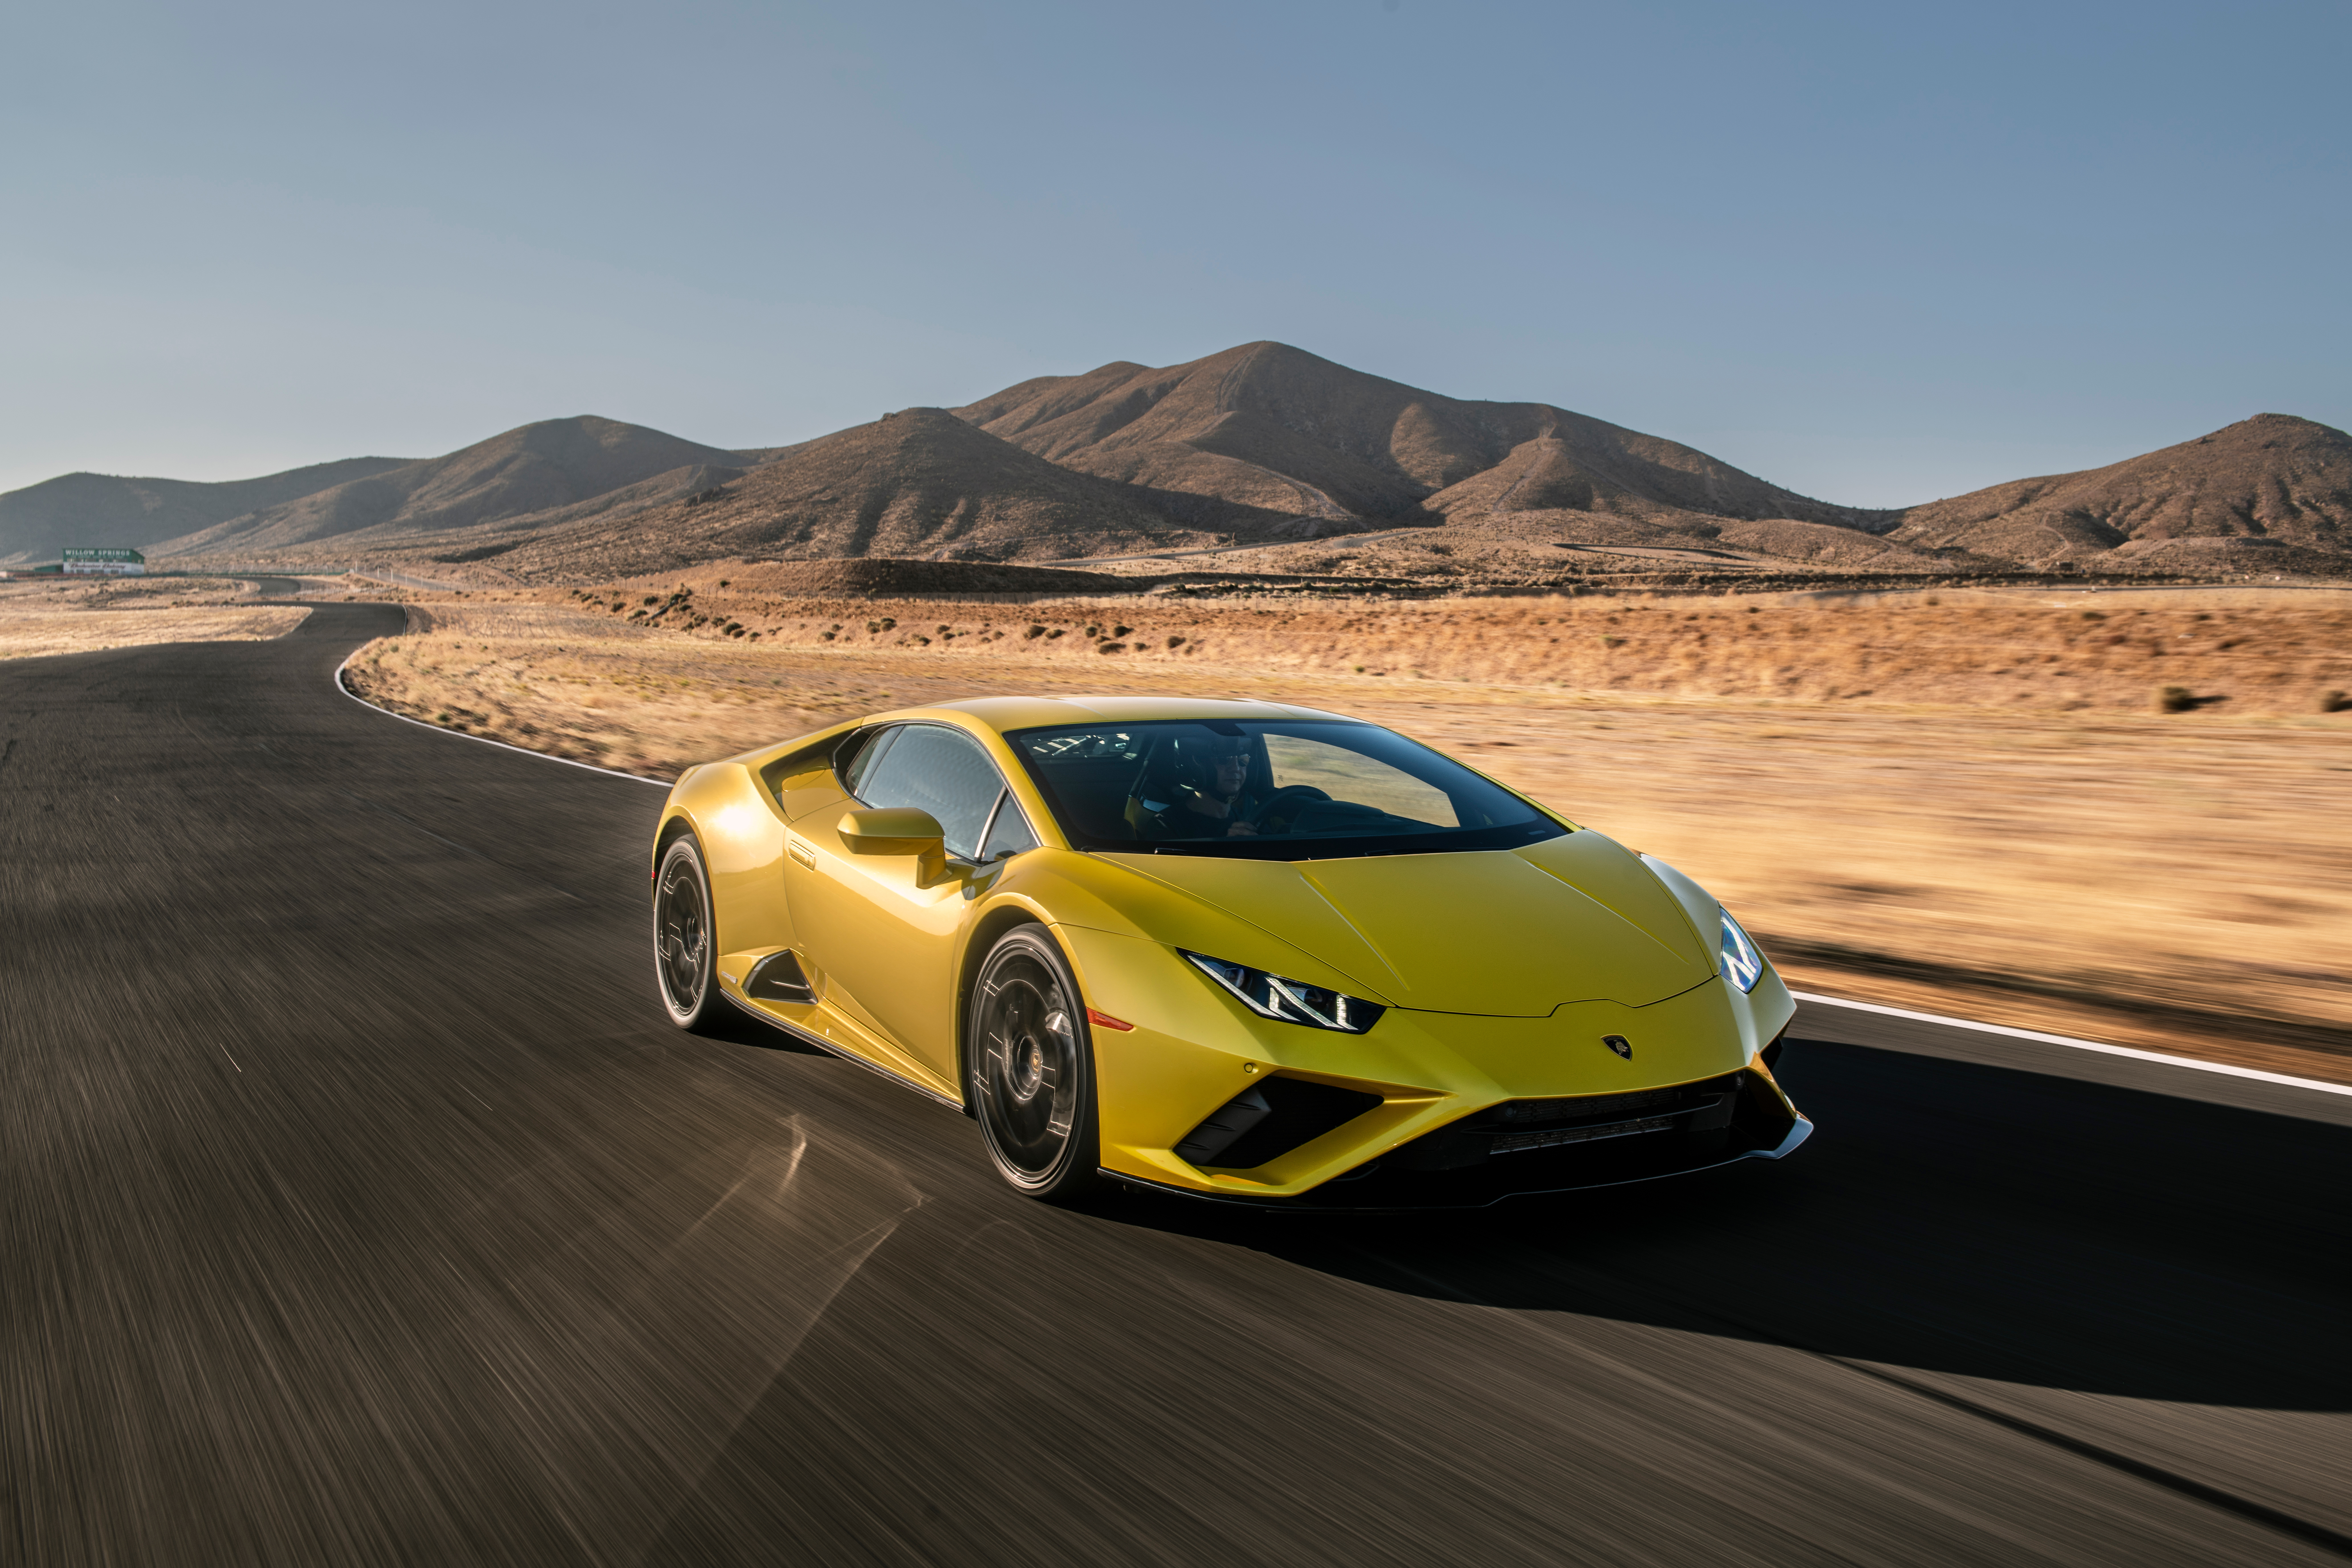 Baixe gratuitamente a imagem Lamborghini, Carro, Super Carro, Lamborghini Huracan, Veículos, Carro Amarelo, Lamborghini Huracán Evo na área de trabalho do seu PC